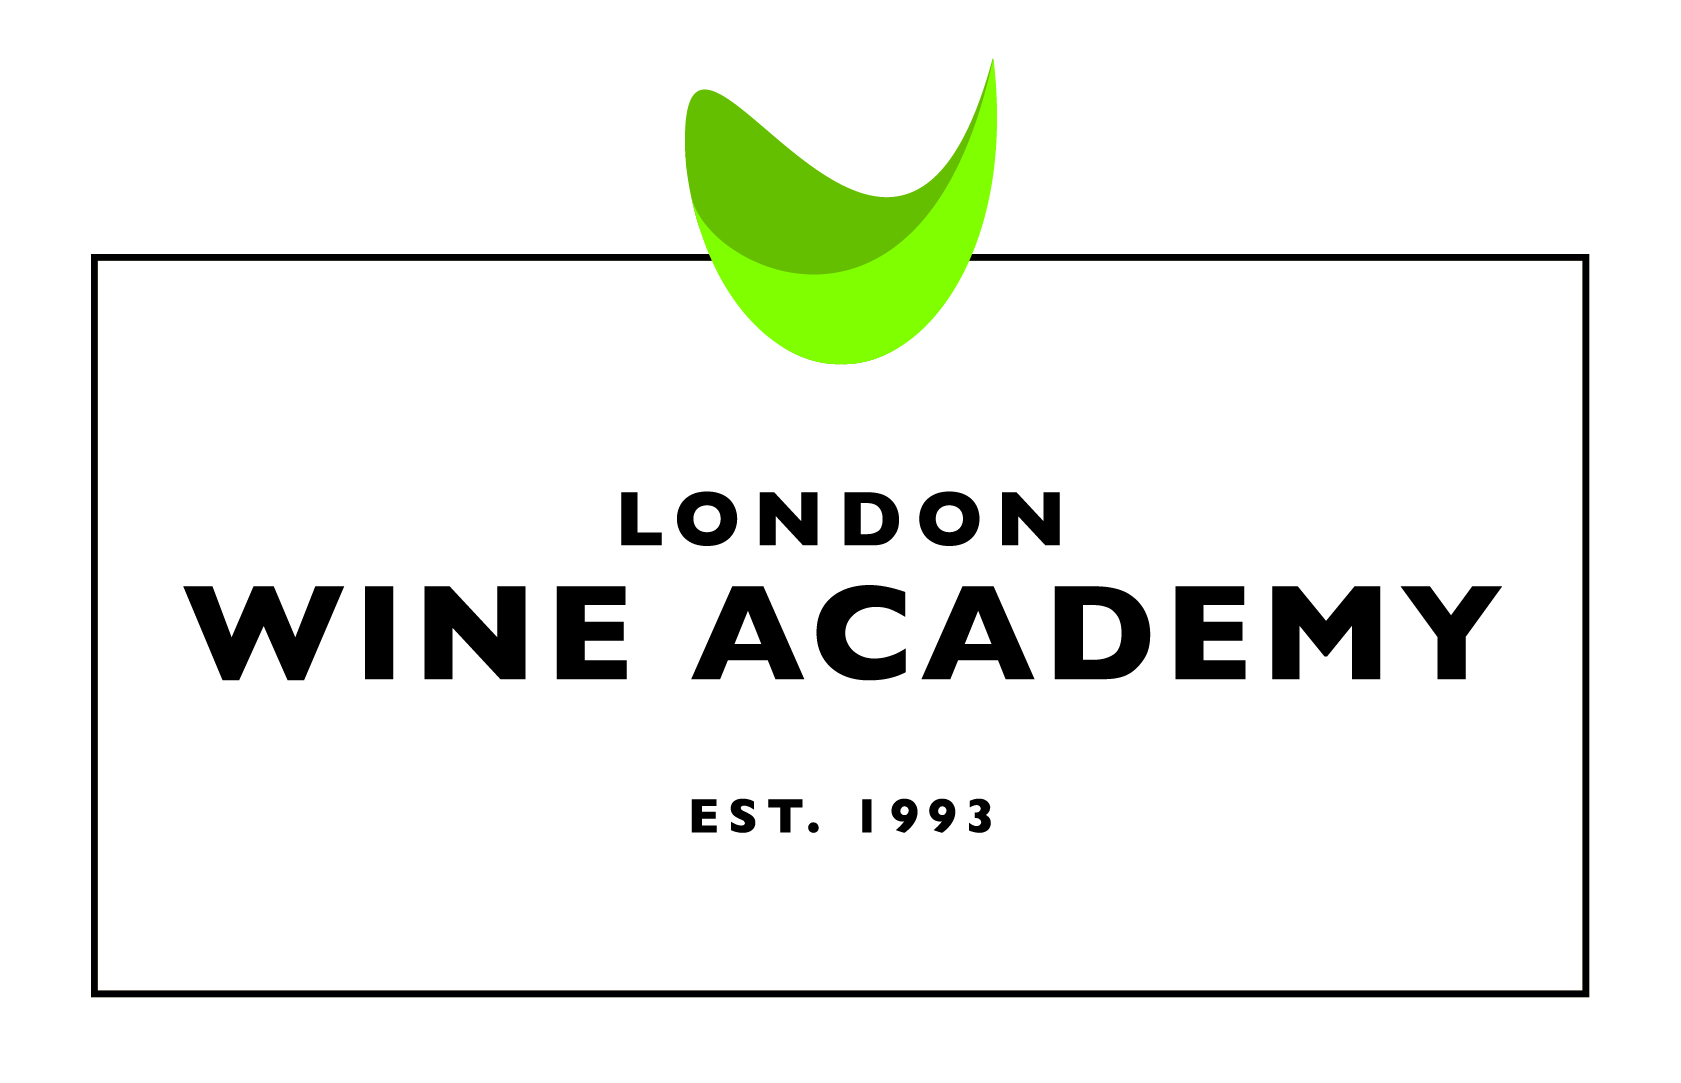 The London Wine Academy